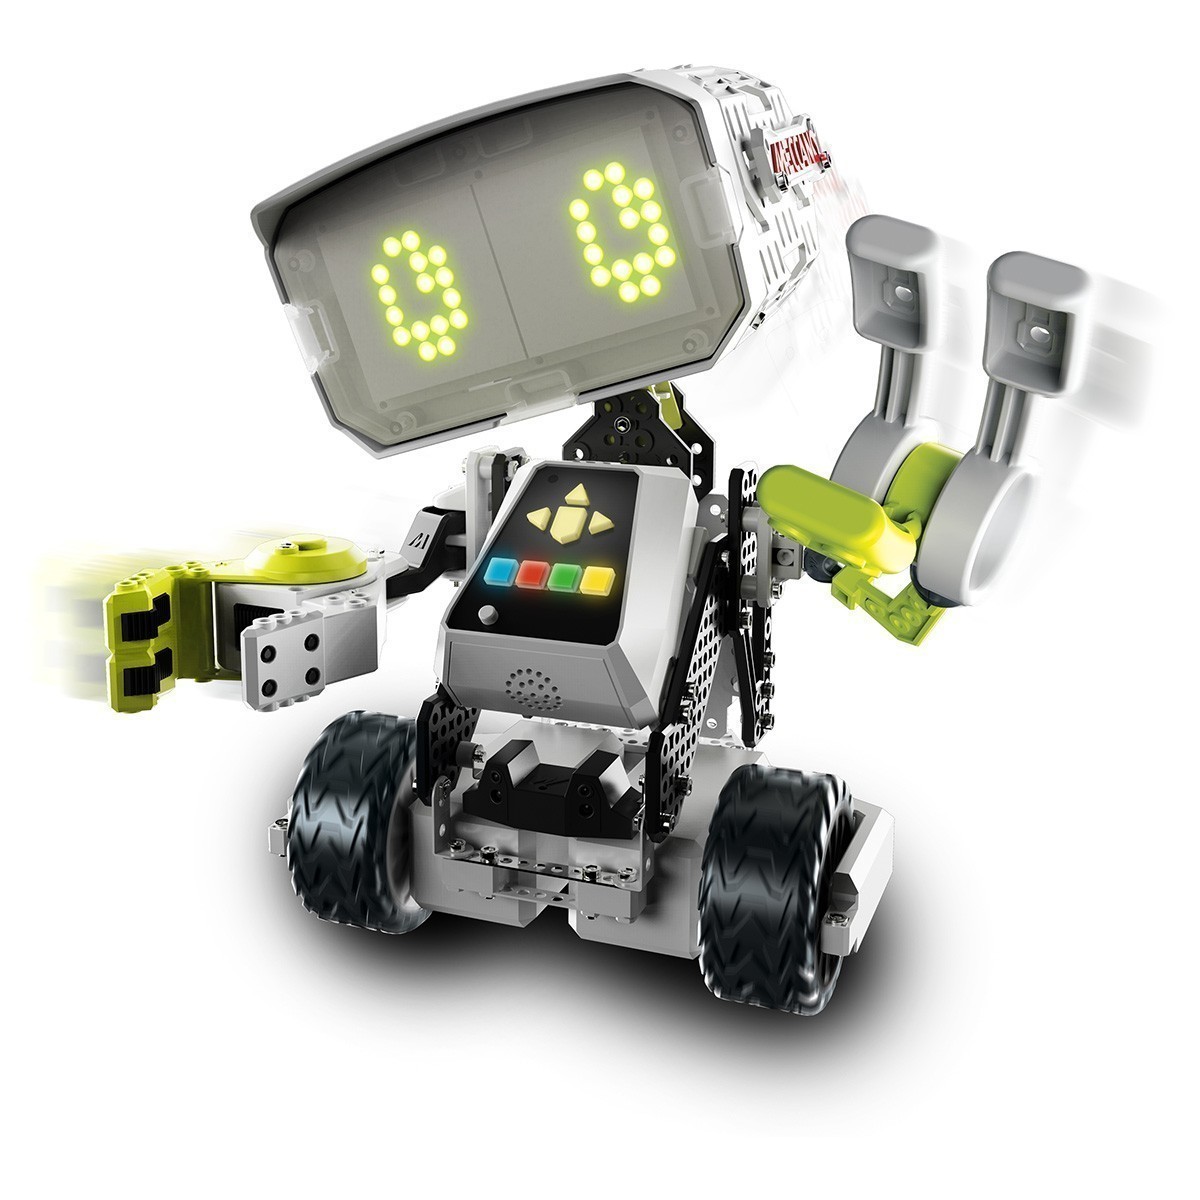 Meccano Engineering & Robotics 17401 - Robot M.A.X